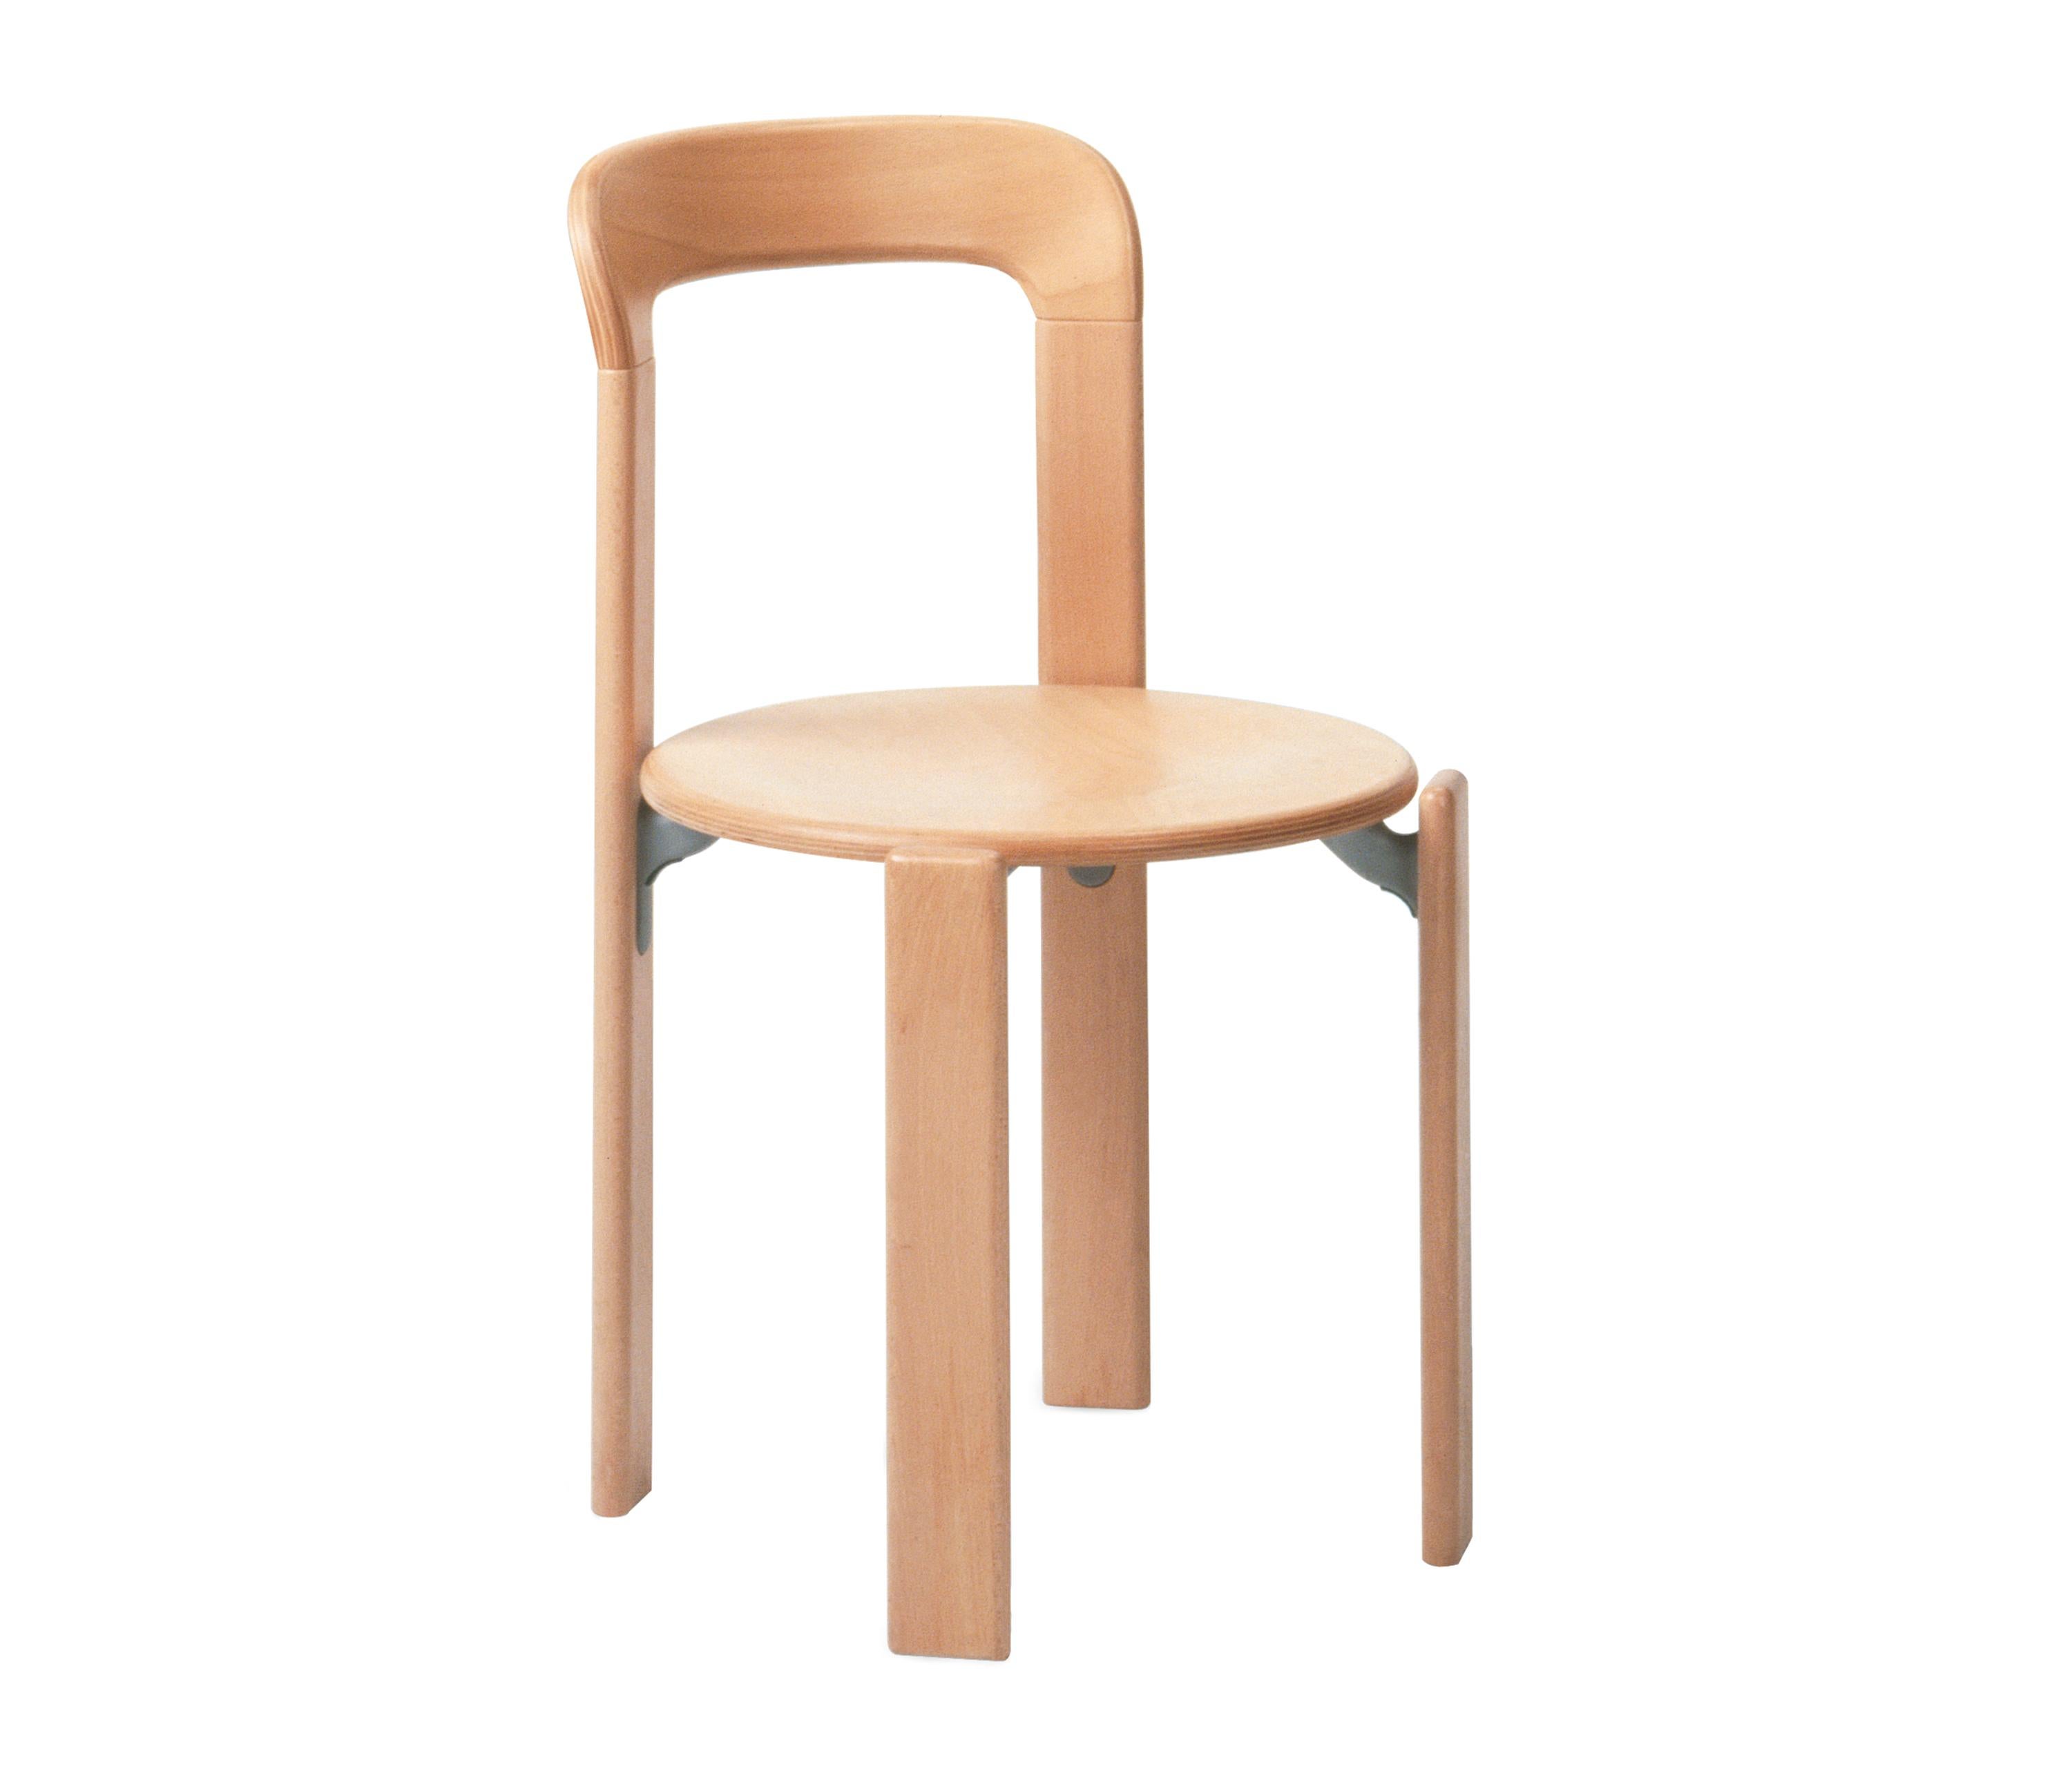 Contemporary Dietiker Rey, Mid-Century Modern Swiss Dining chair Designed by Bruno Rey, 1971